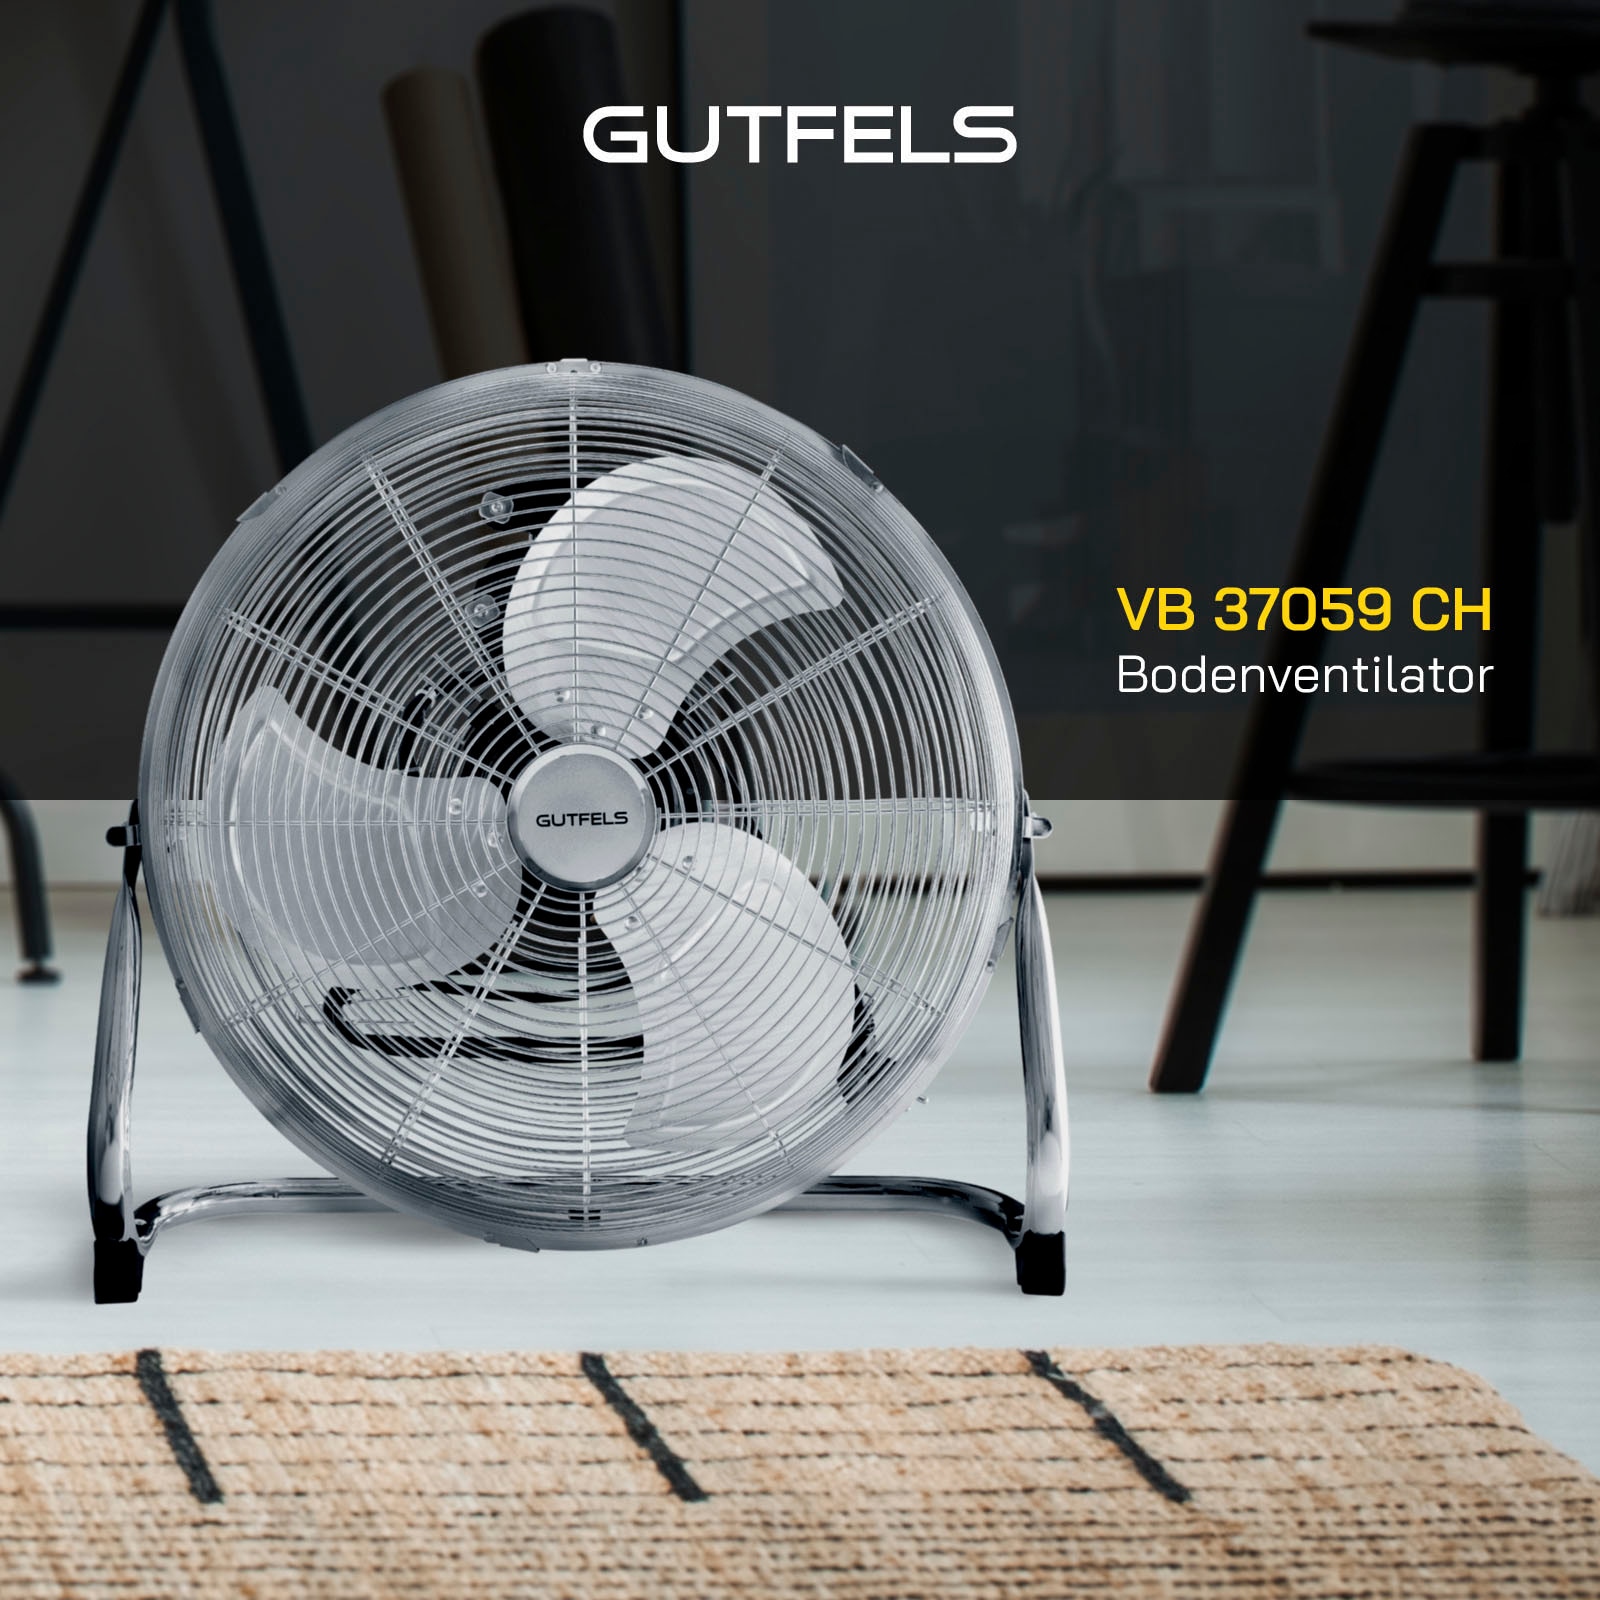 Gutfels Bodenventilator »VB 37059 ch«, Ø 50 cm, Vollmetall, 100 W Leistung, edelstahlfarben